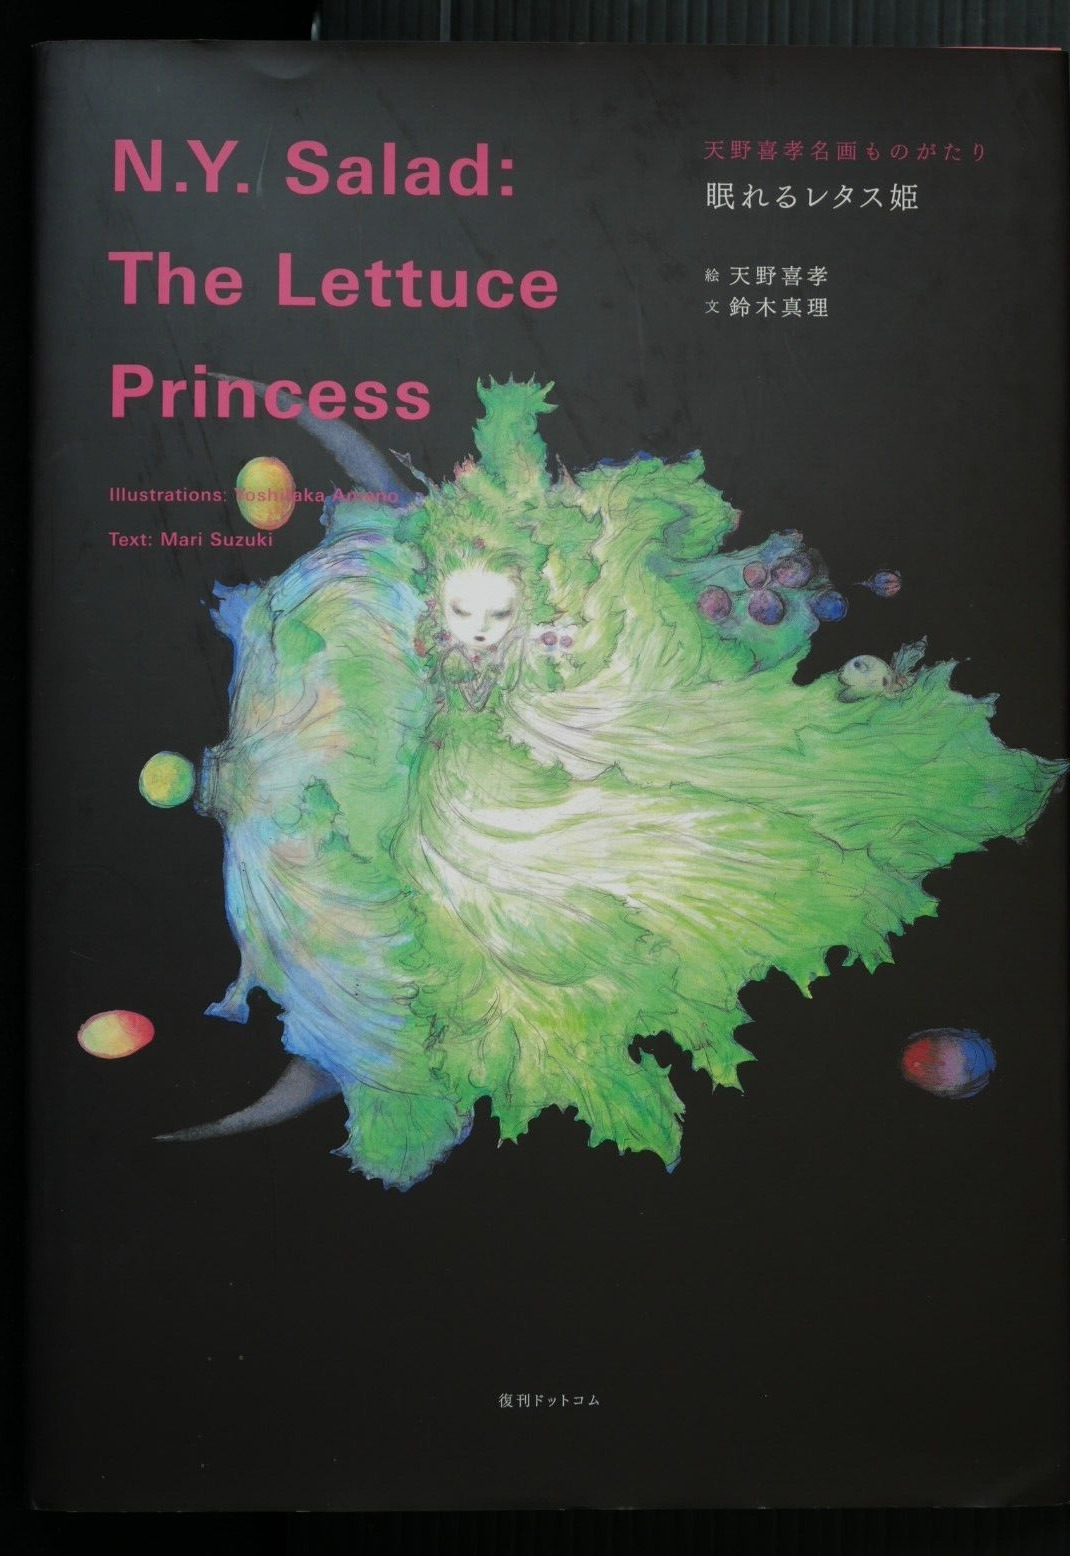 Yoshitaka Amano Picture Book: N.Y. Salad: The Lettuce Princess - JAPAN